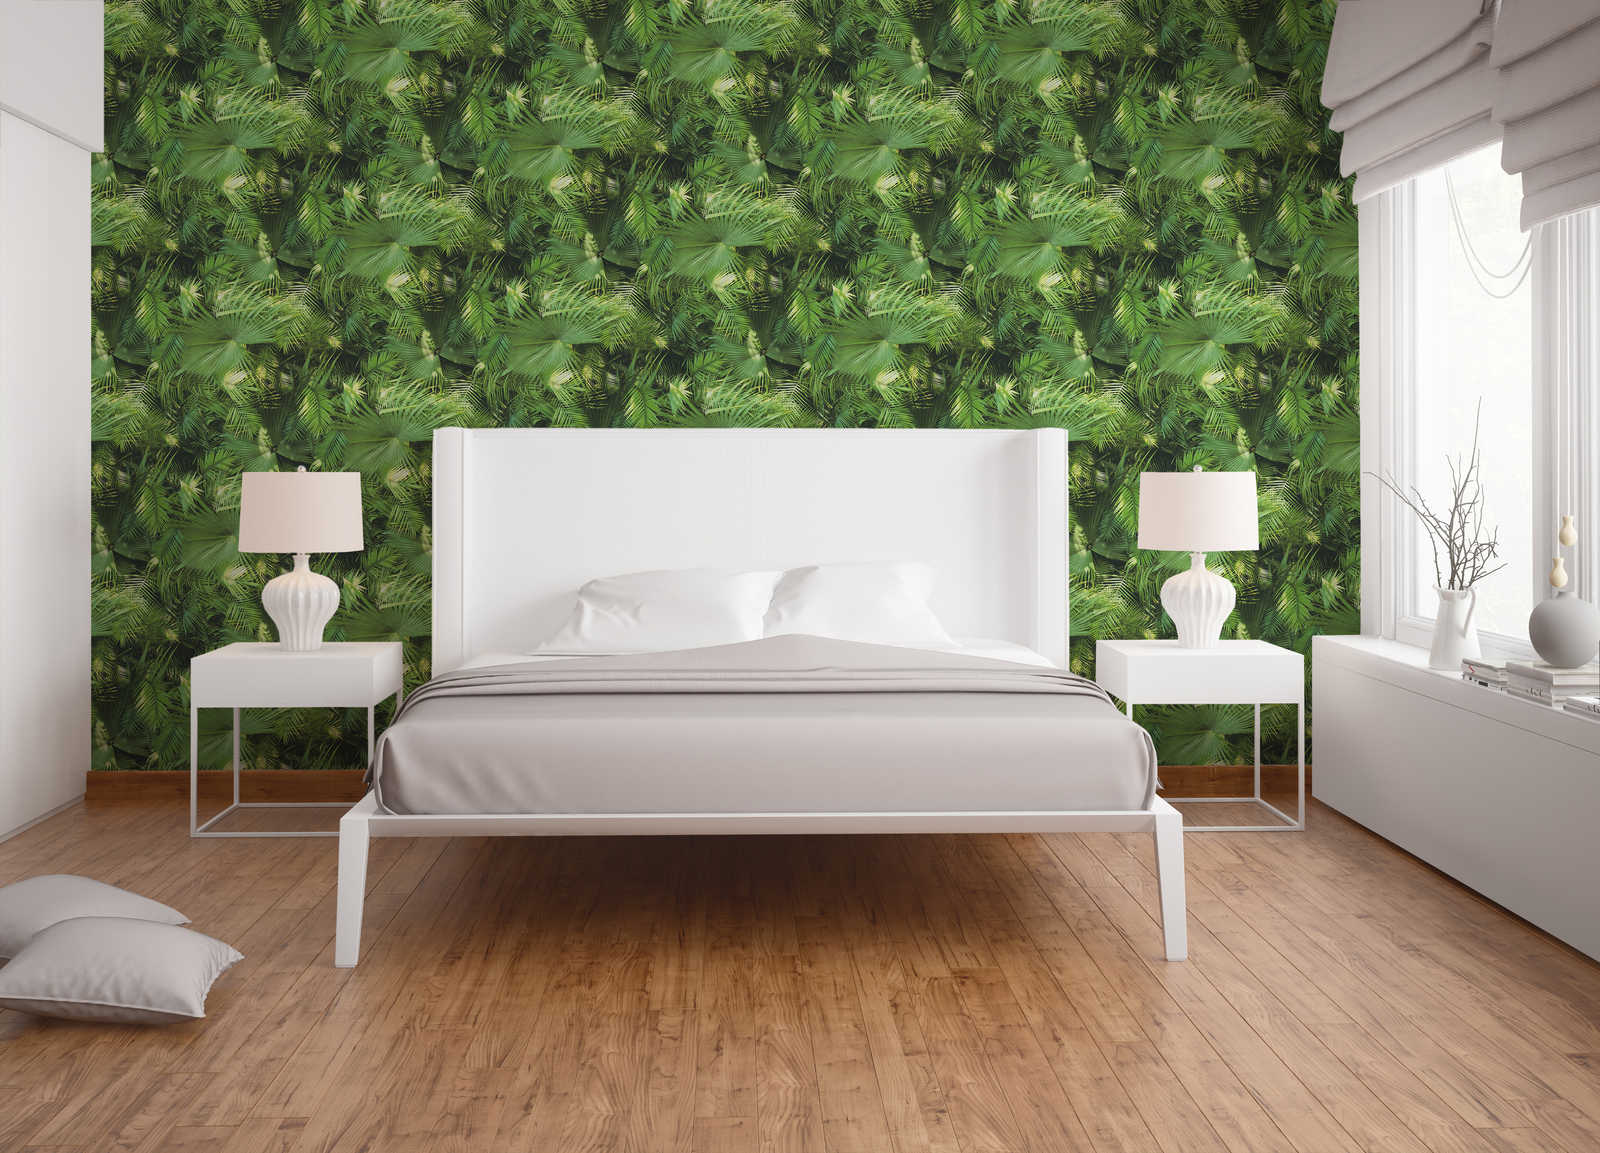             Self-adhesive wallpaper | jungle leaves pattern green jungle
        